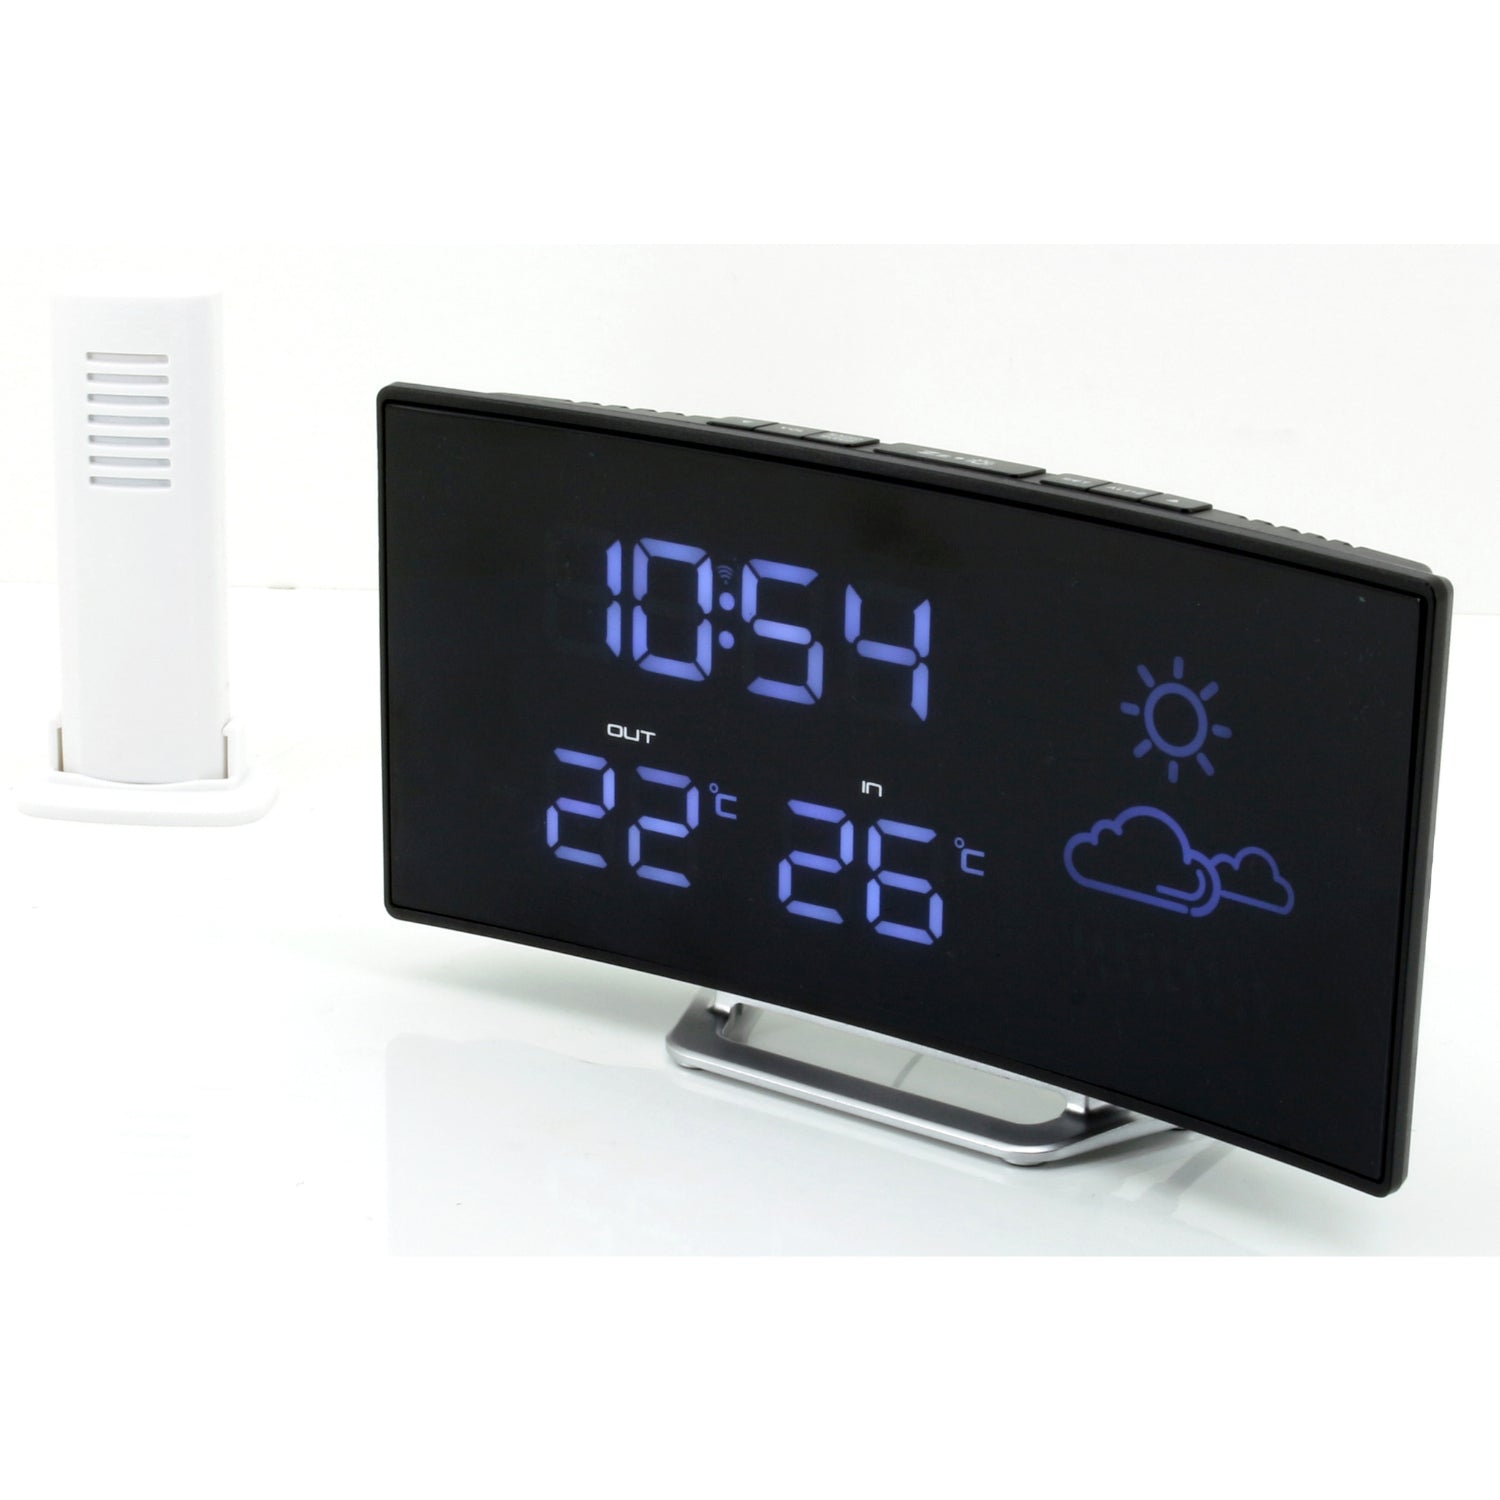 Soundmaster FUR100 weather station wireless outdoor sensor radio alarm clock LCD sleep timer FM radio